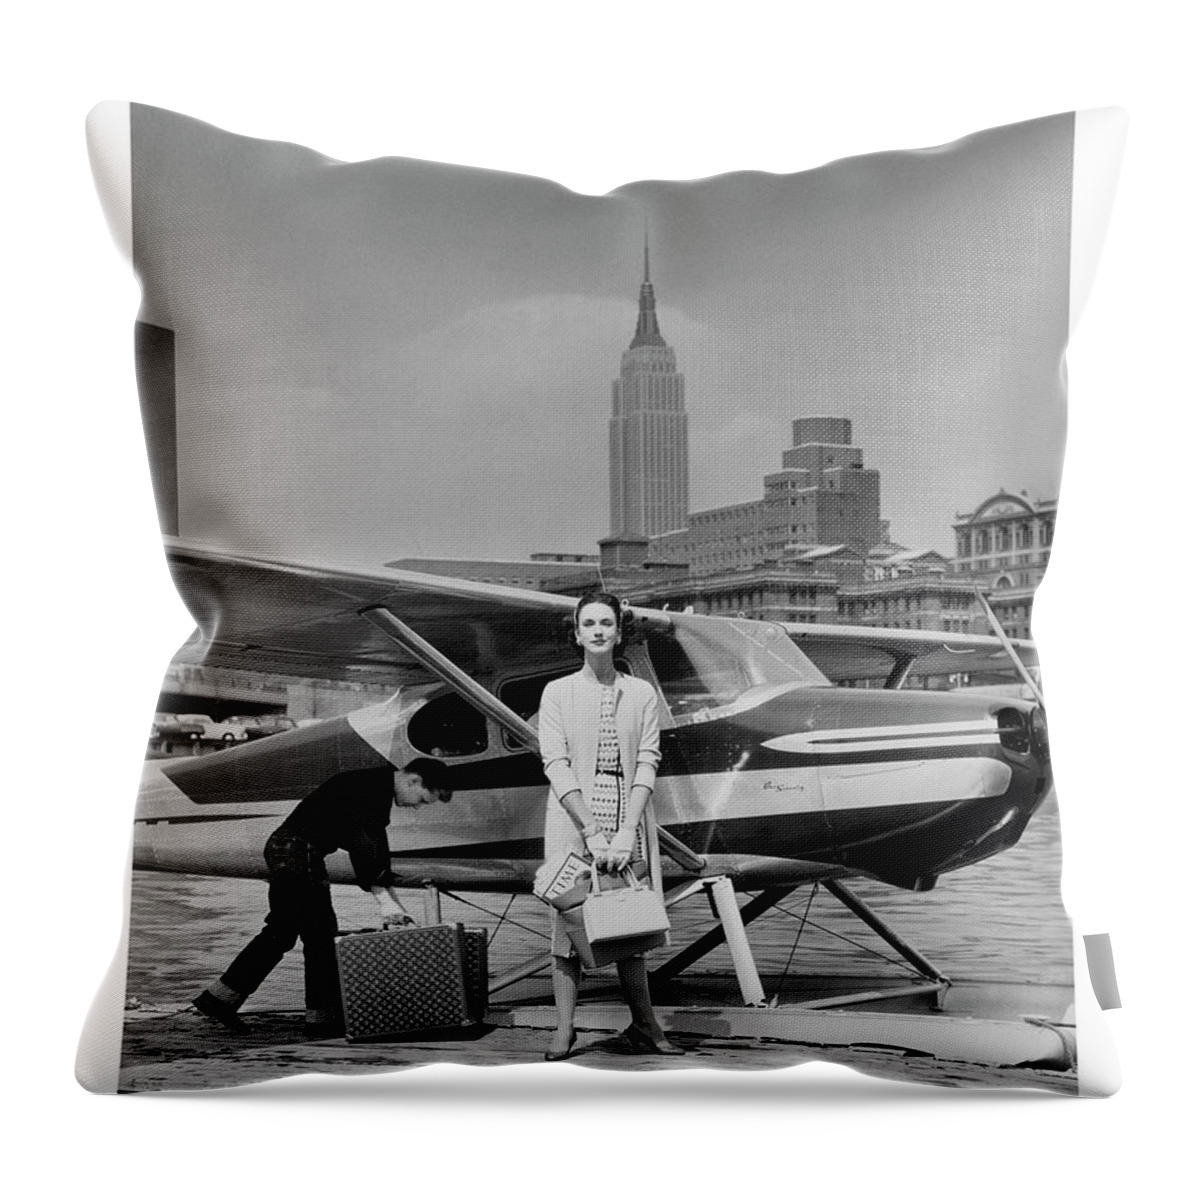 Woman By A Seaplane Throw Pillow